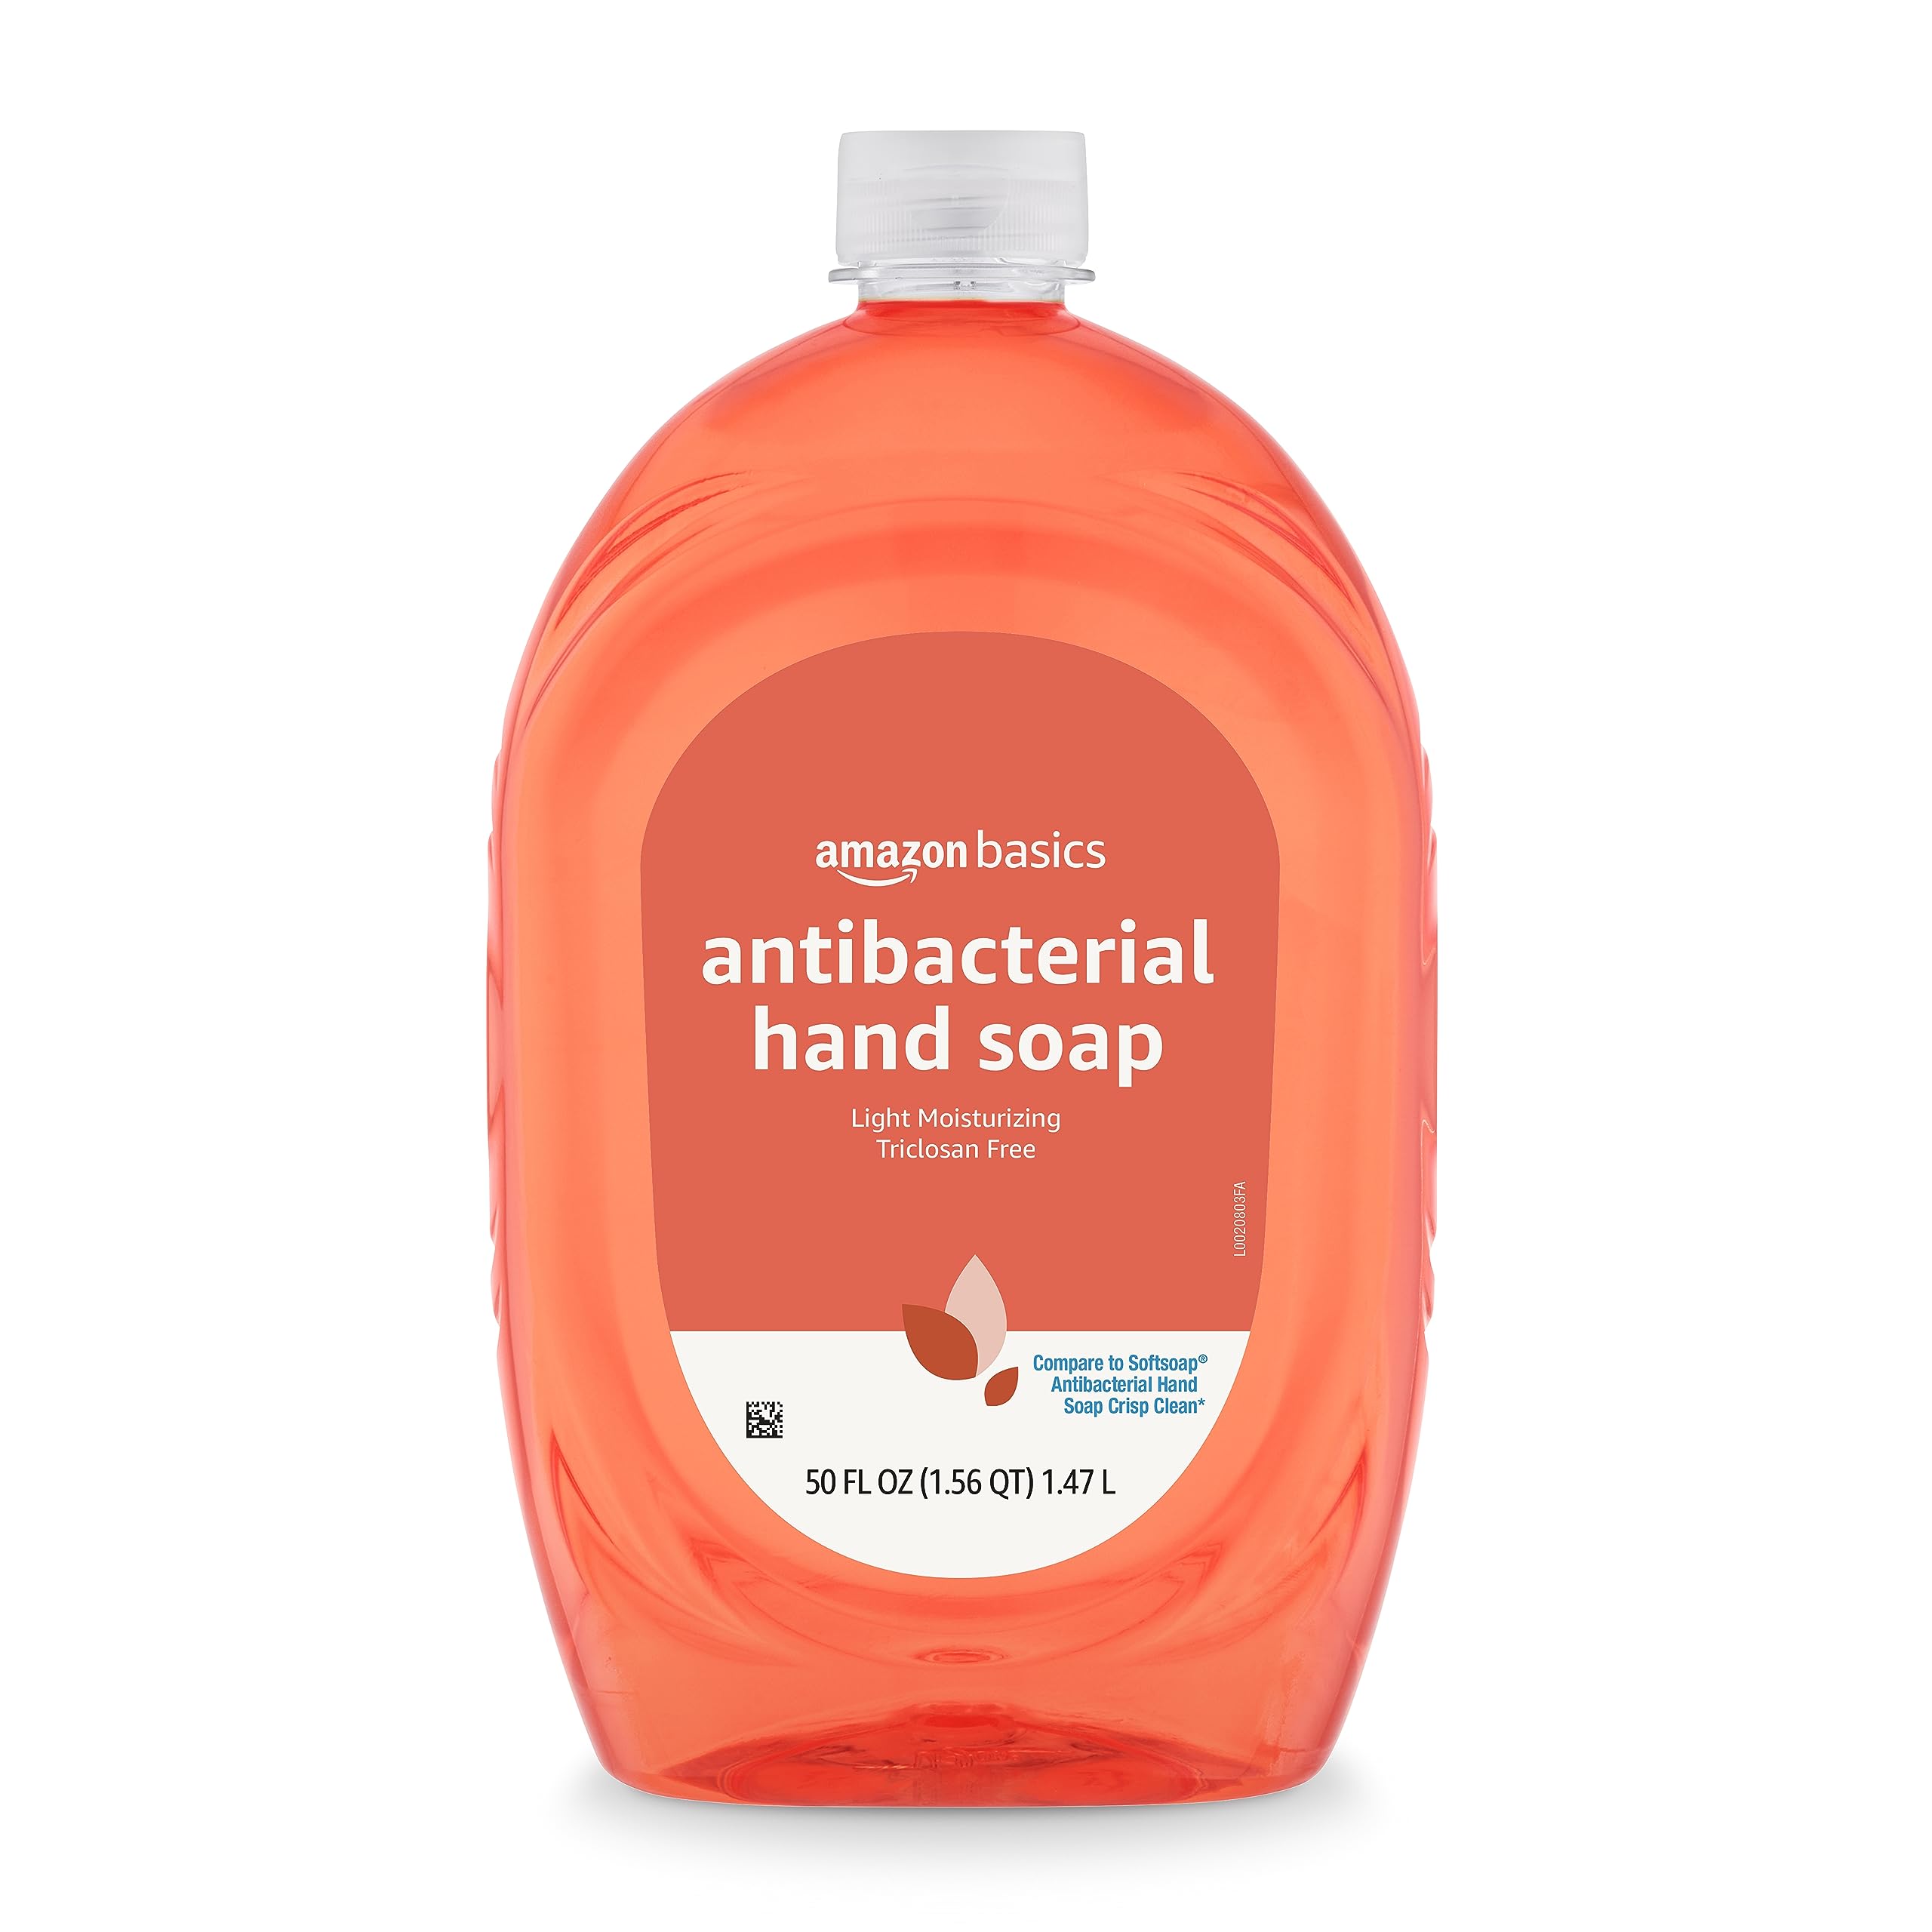 Amazon Basics Antibacterial Liquid Hand Soap Refill, Light Moisturizing, Triclosan-Free, Citrus, 50 Fl Oz (Pack of 1) (Previously Solimo) $3.56